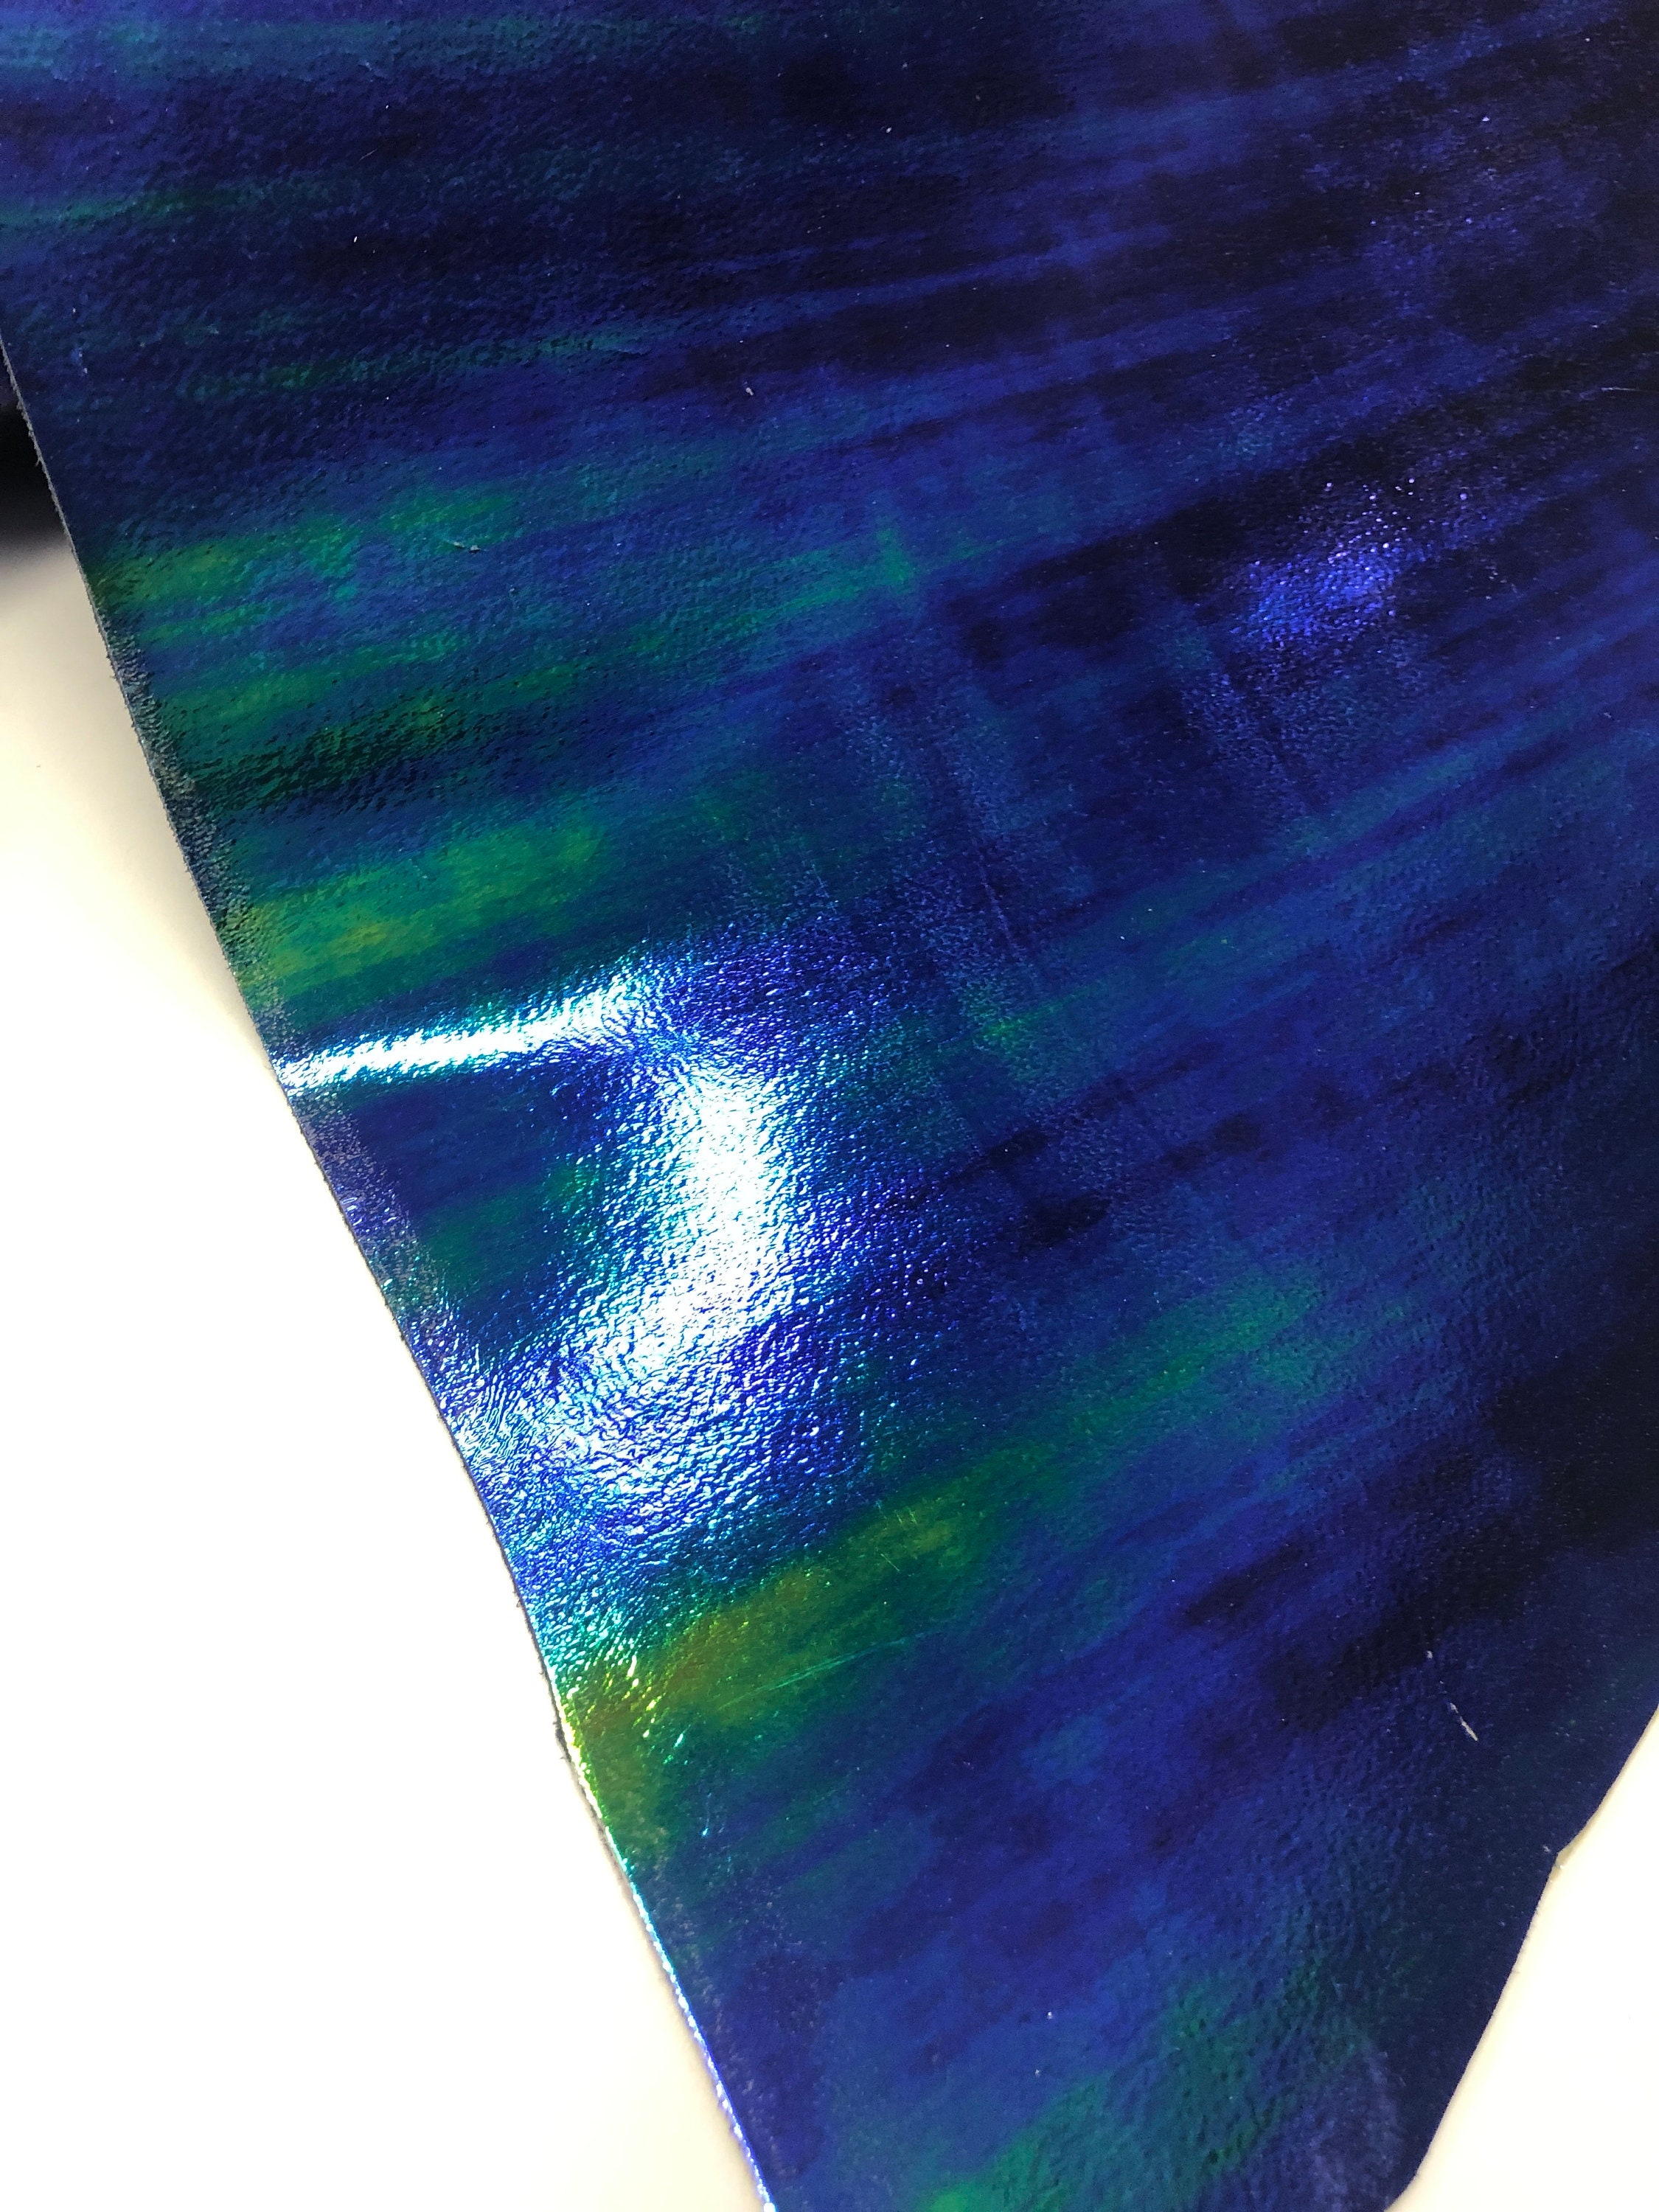 FROZEN Blue Lambskin Leather Scrap MIX Pre Cut 5x5-10x10inch